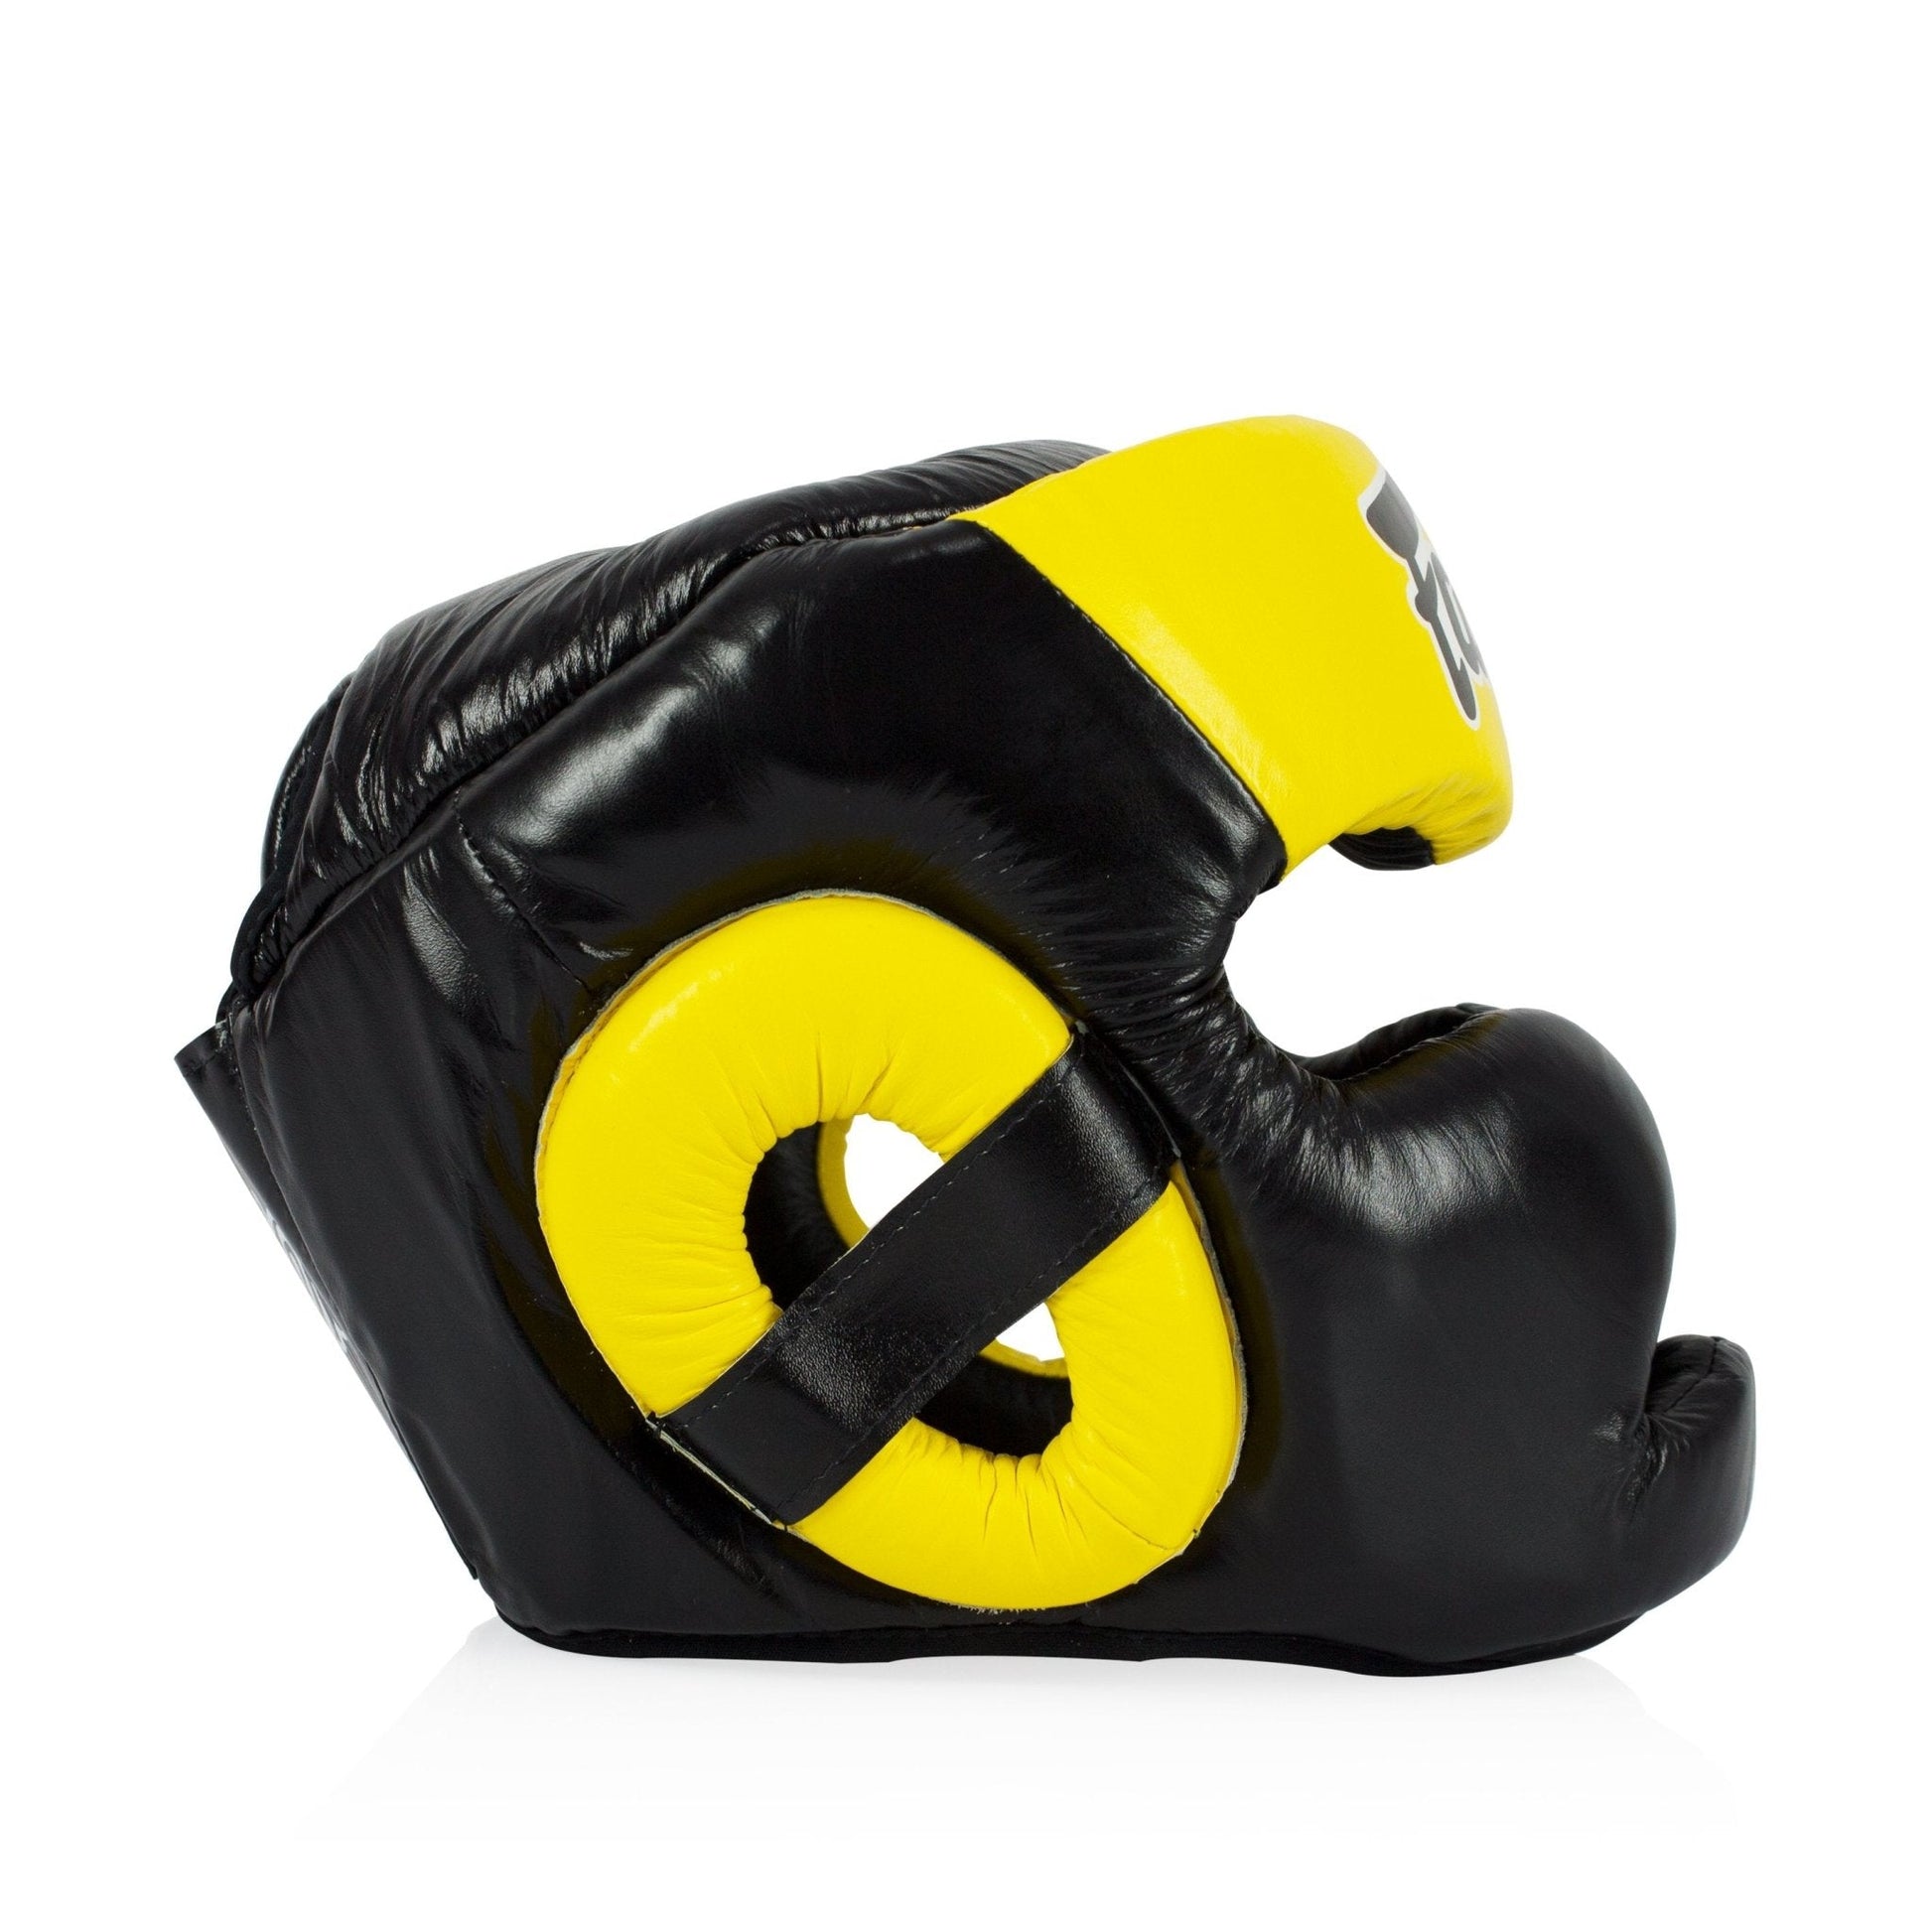 Fairtex Diagonal Vision Sparring Headguard Full Head Cover HG13 Yellow/black - SUPER EXPORT SHOP